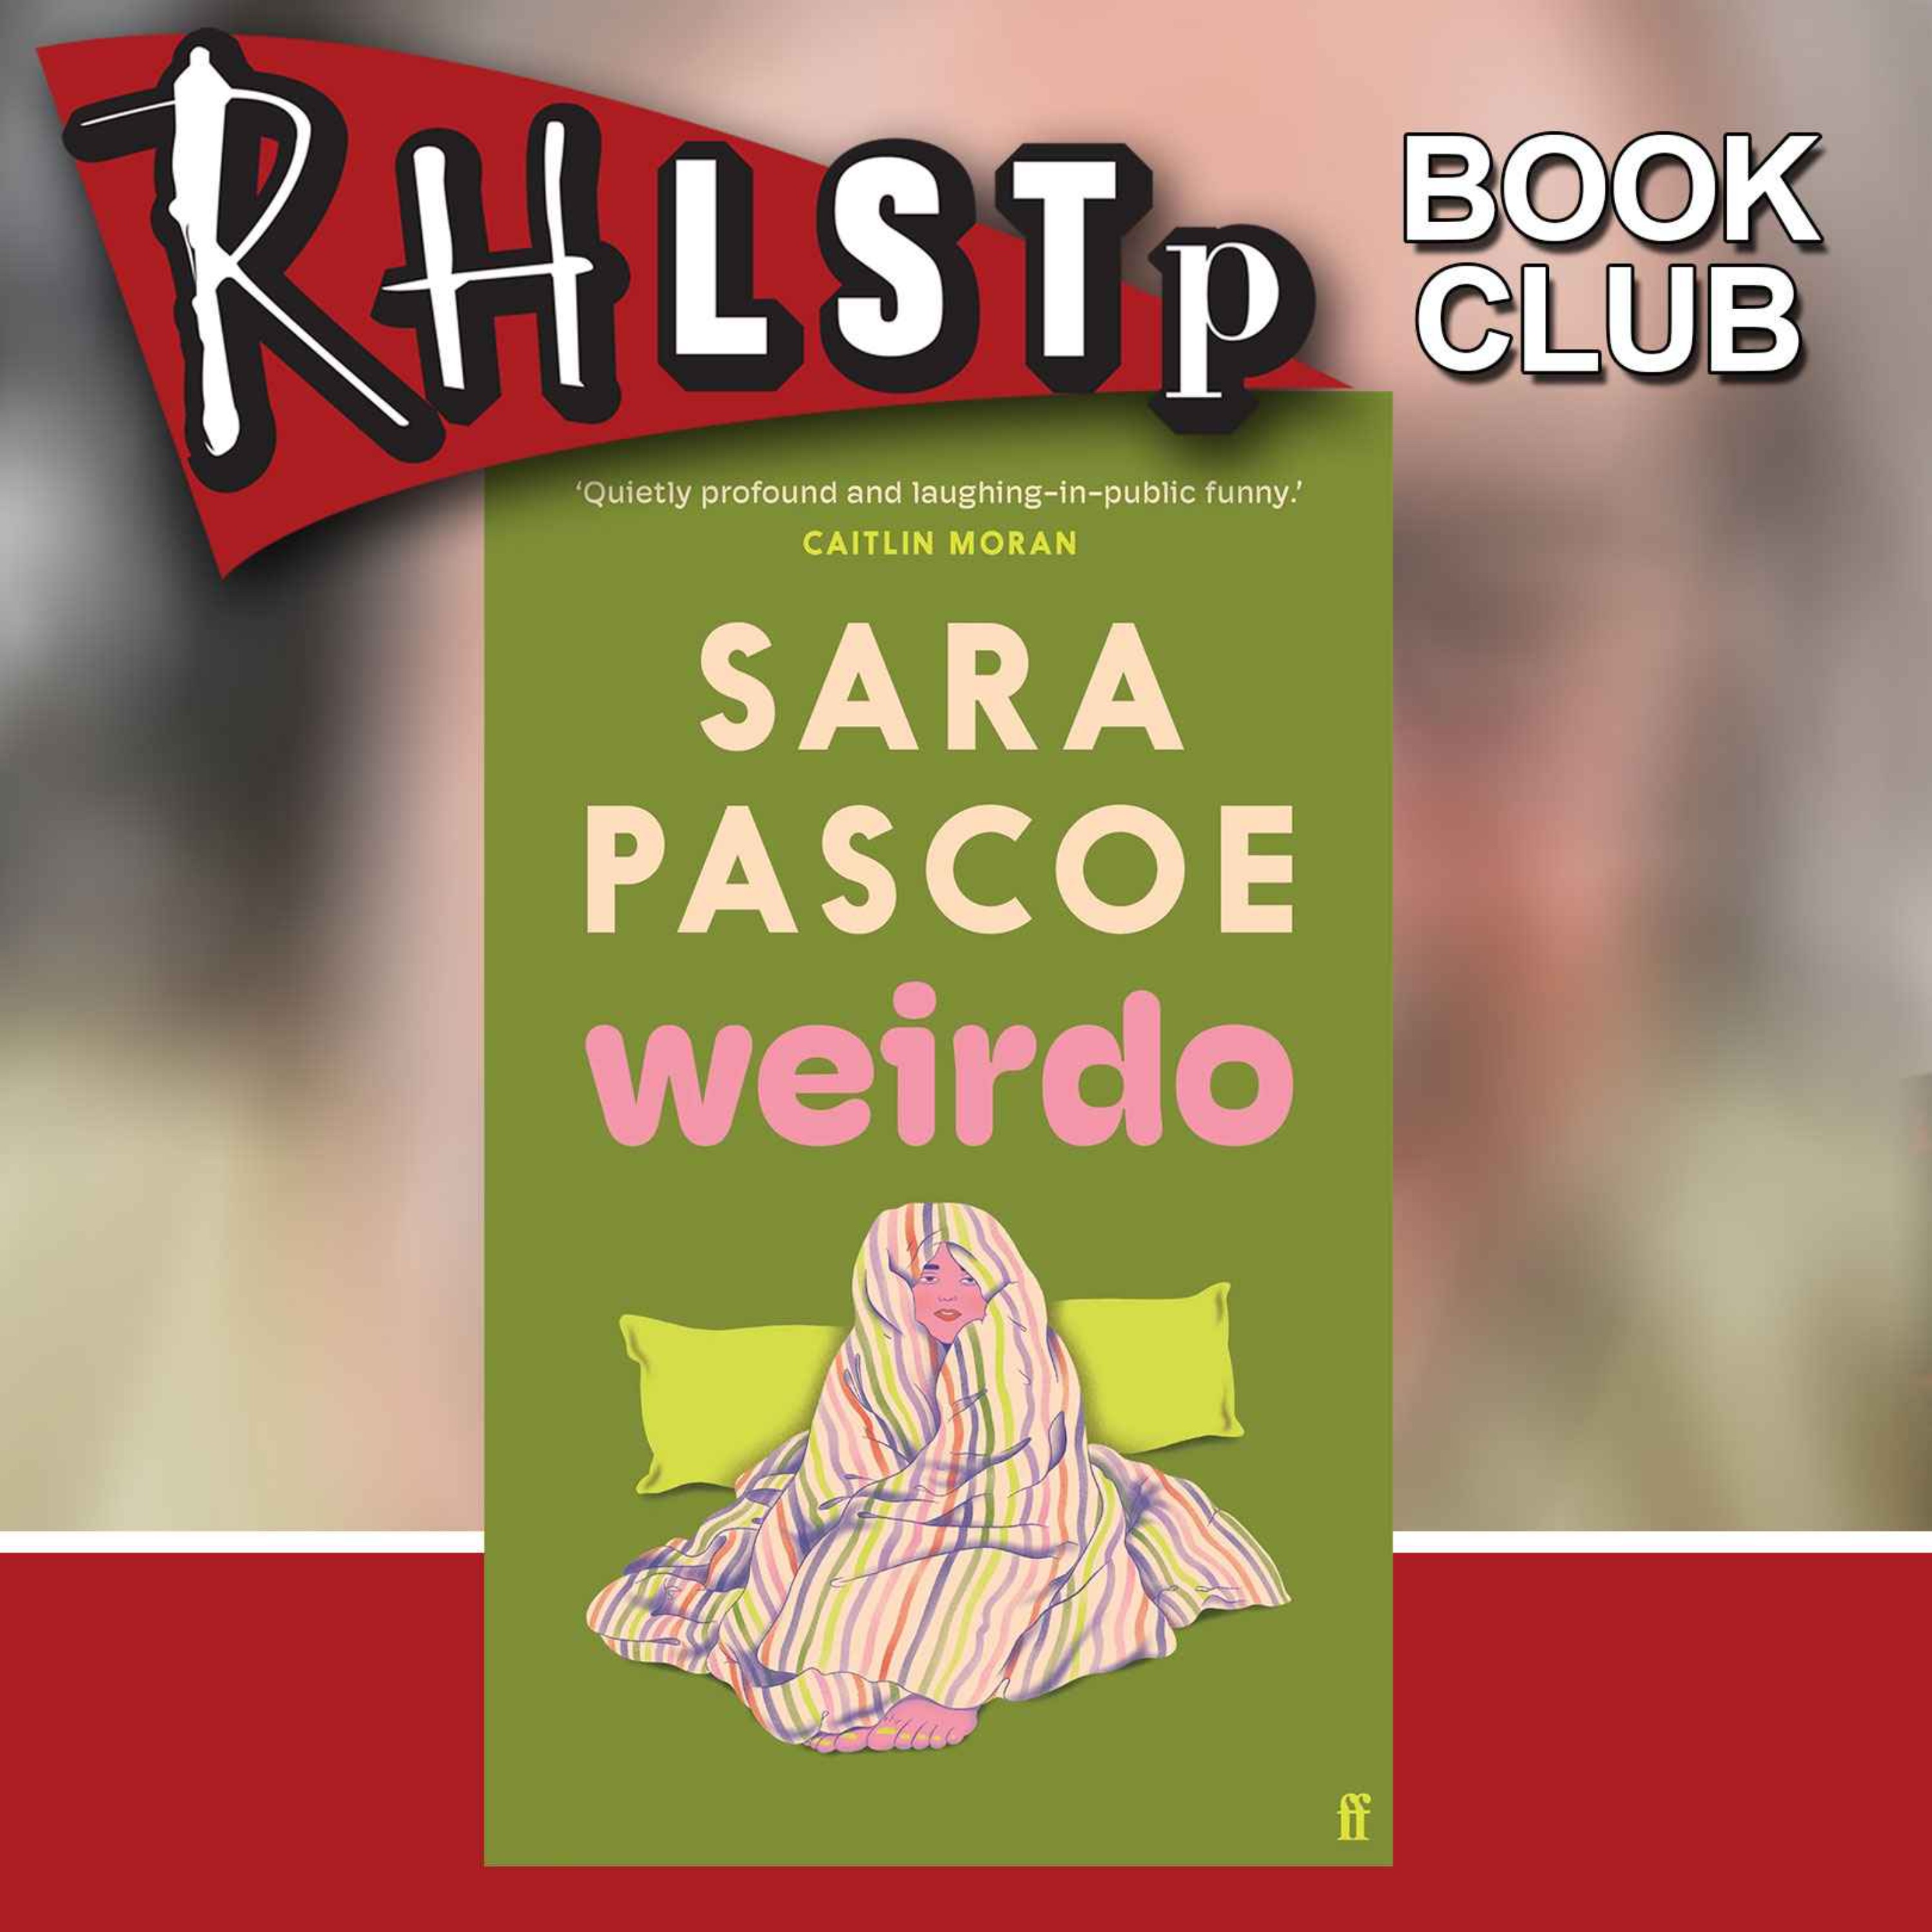 RHLSTP Book Club 93 - Sara Pascoe